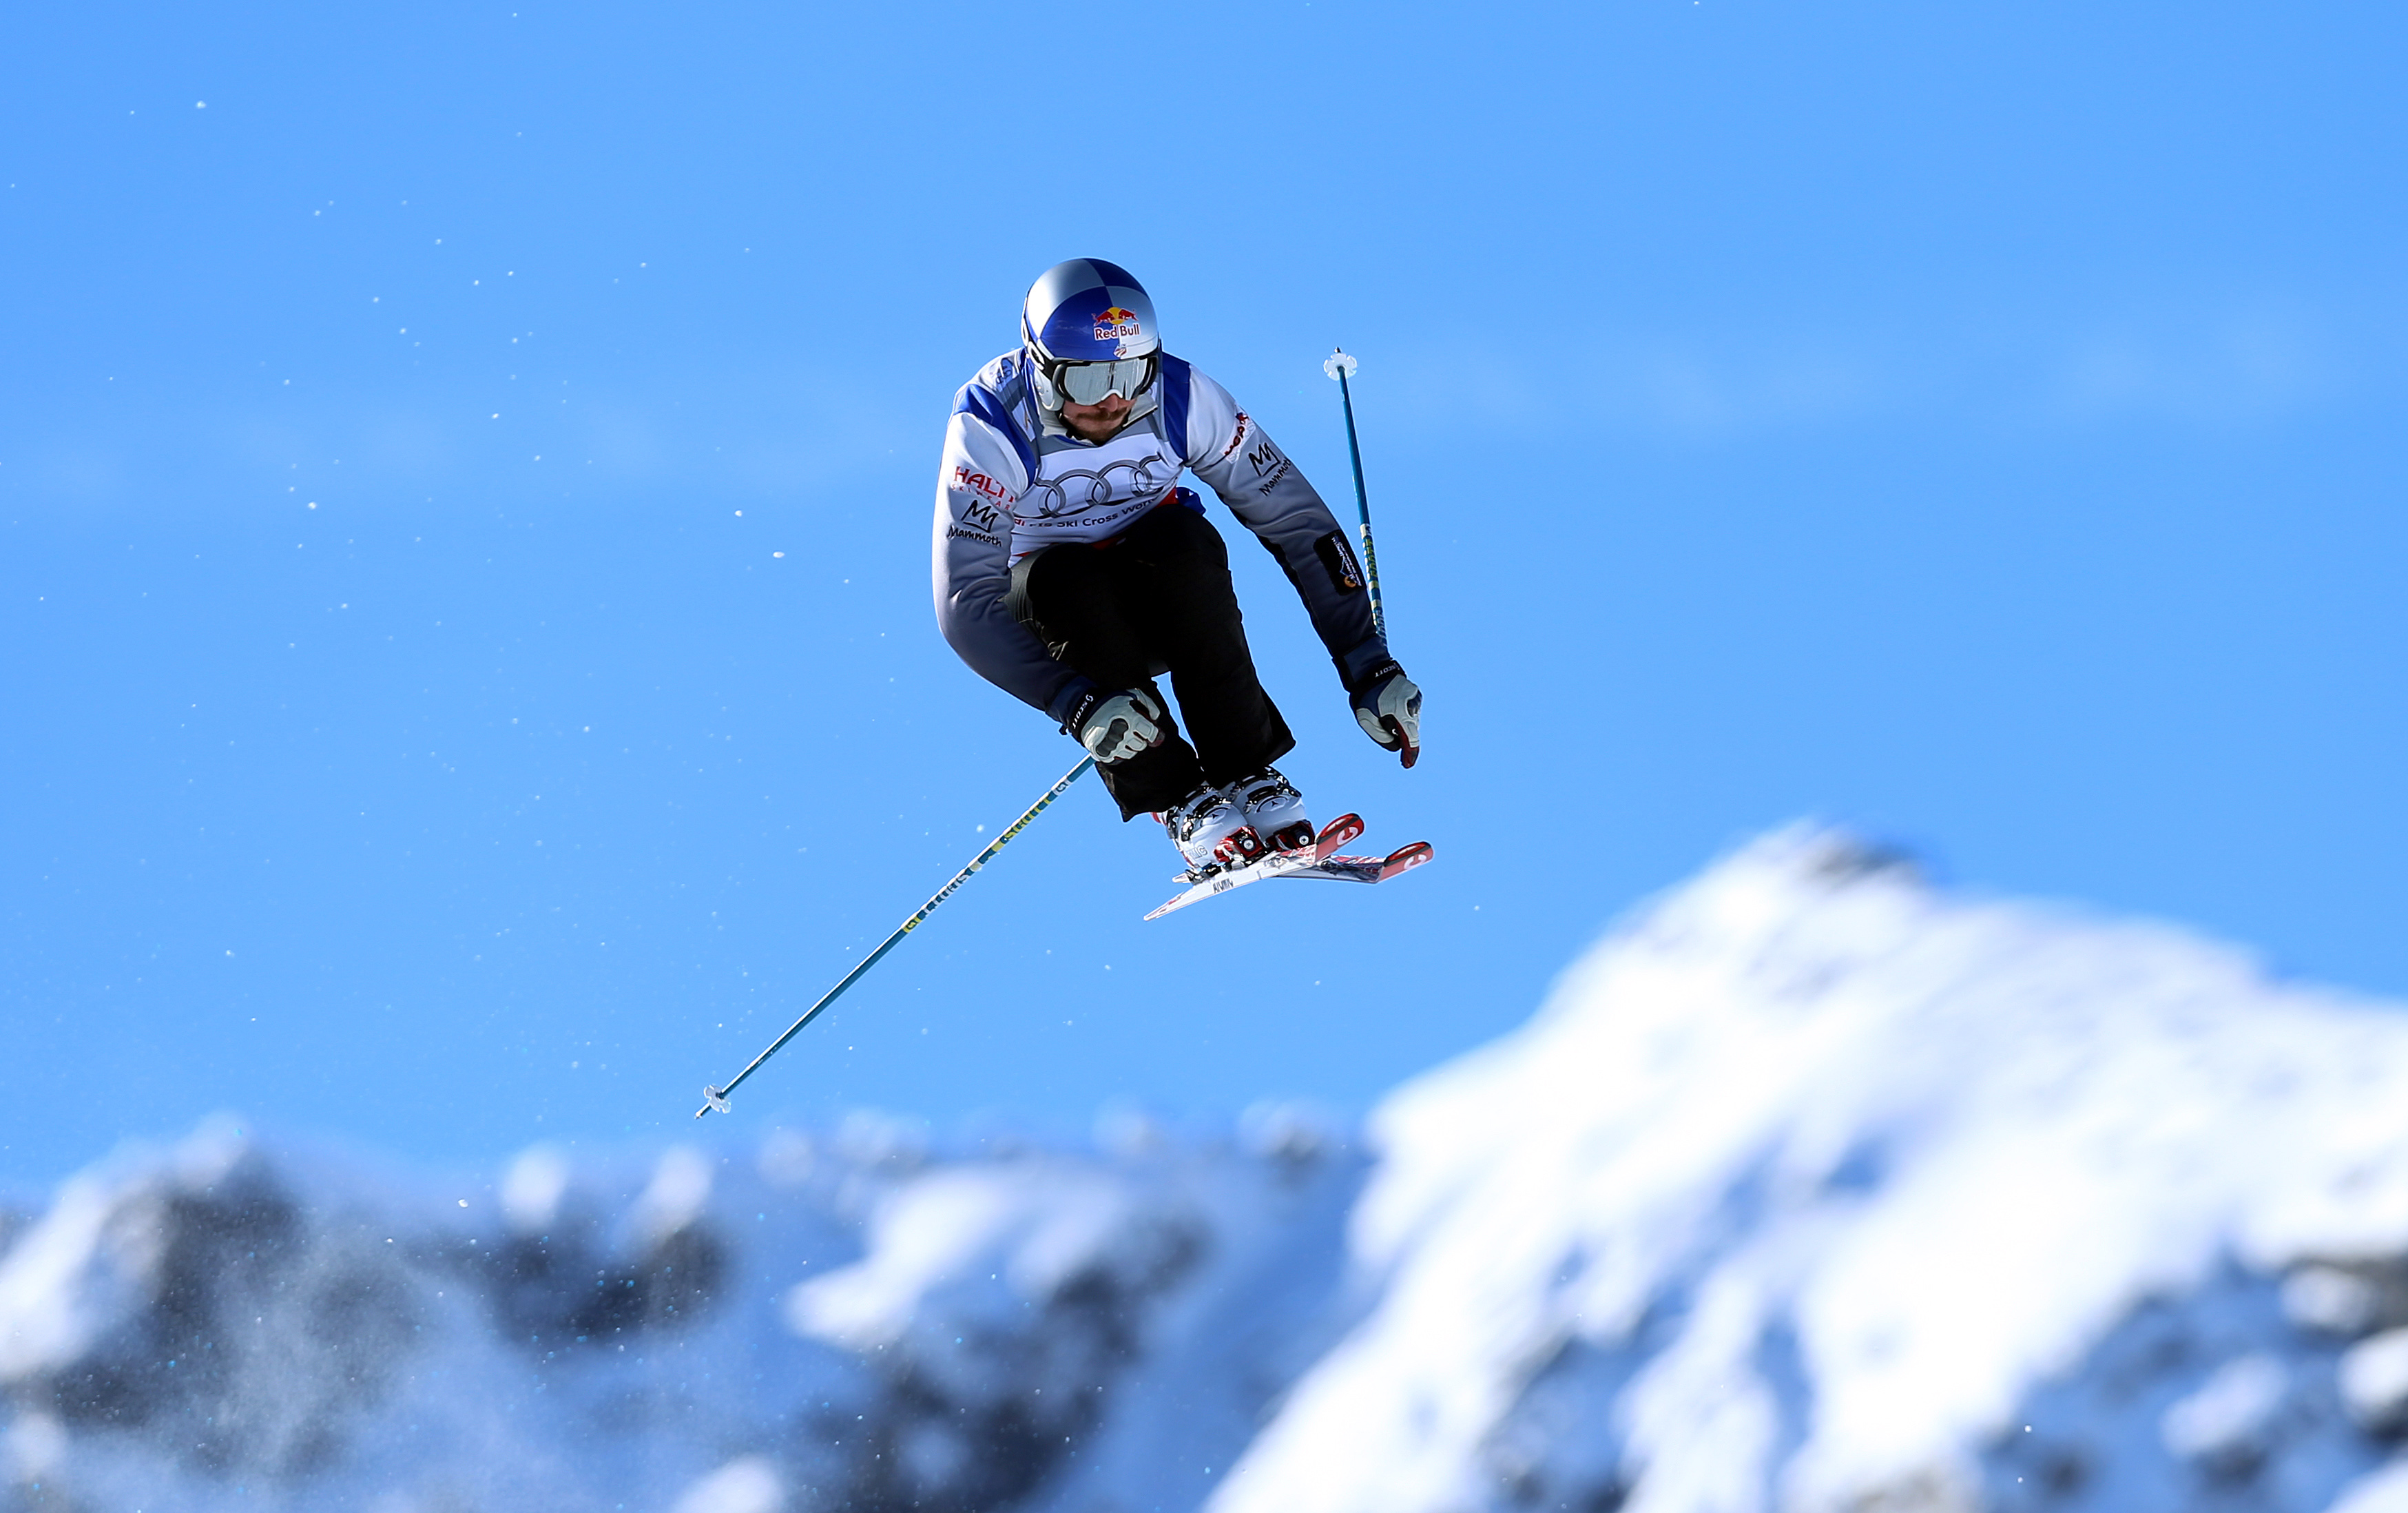 U.S. Freeskiing finalizes Olympic team for slopestyle, halfpipe, ski